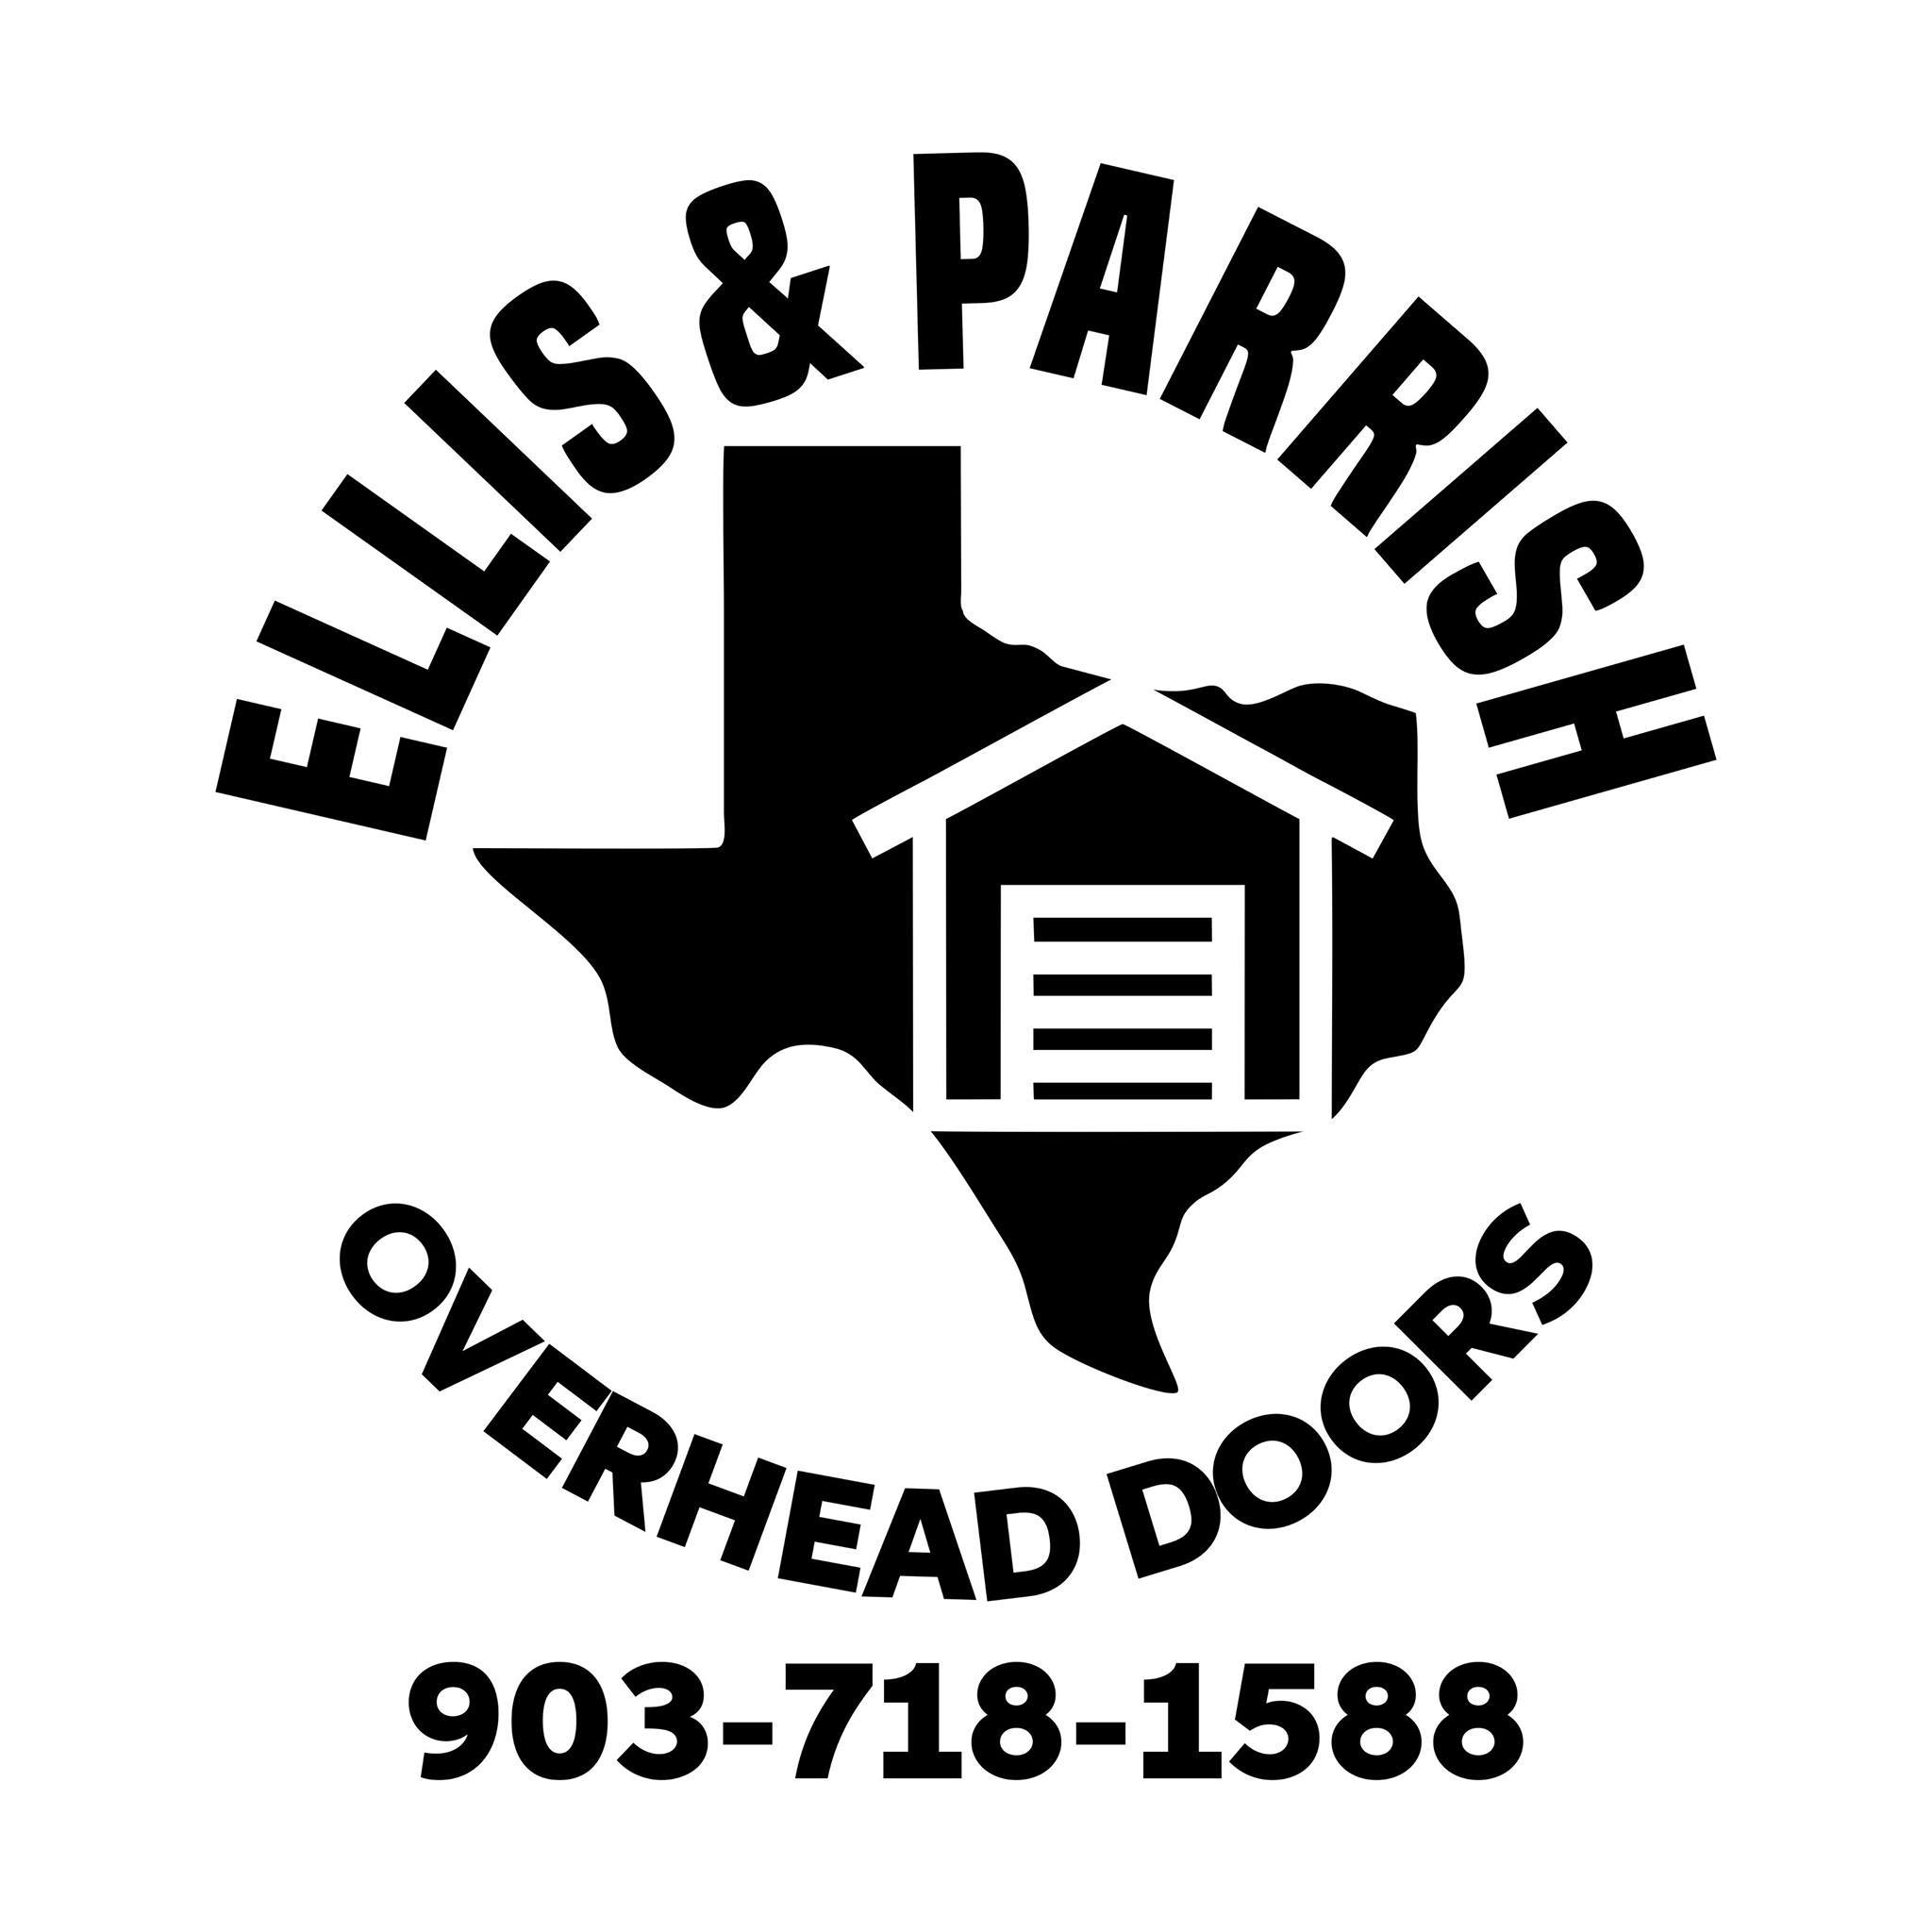 Company logo of Ellis and Parrish Overhead Doors